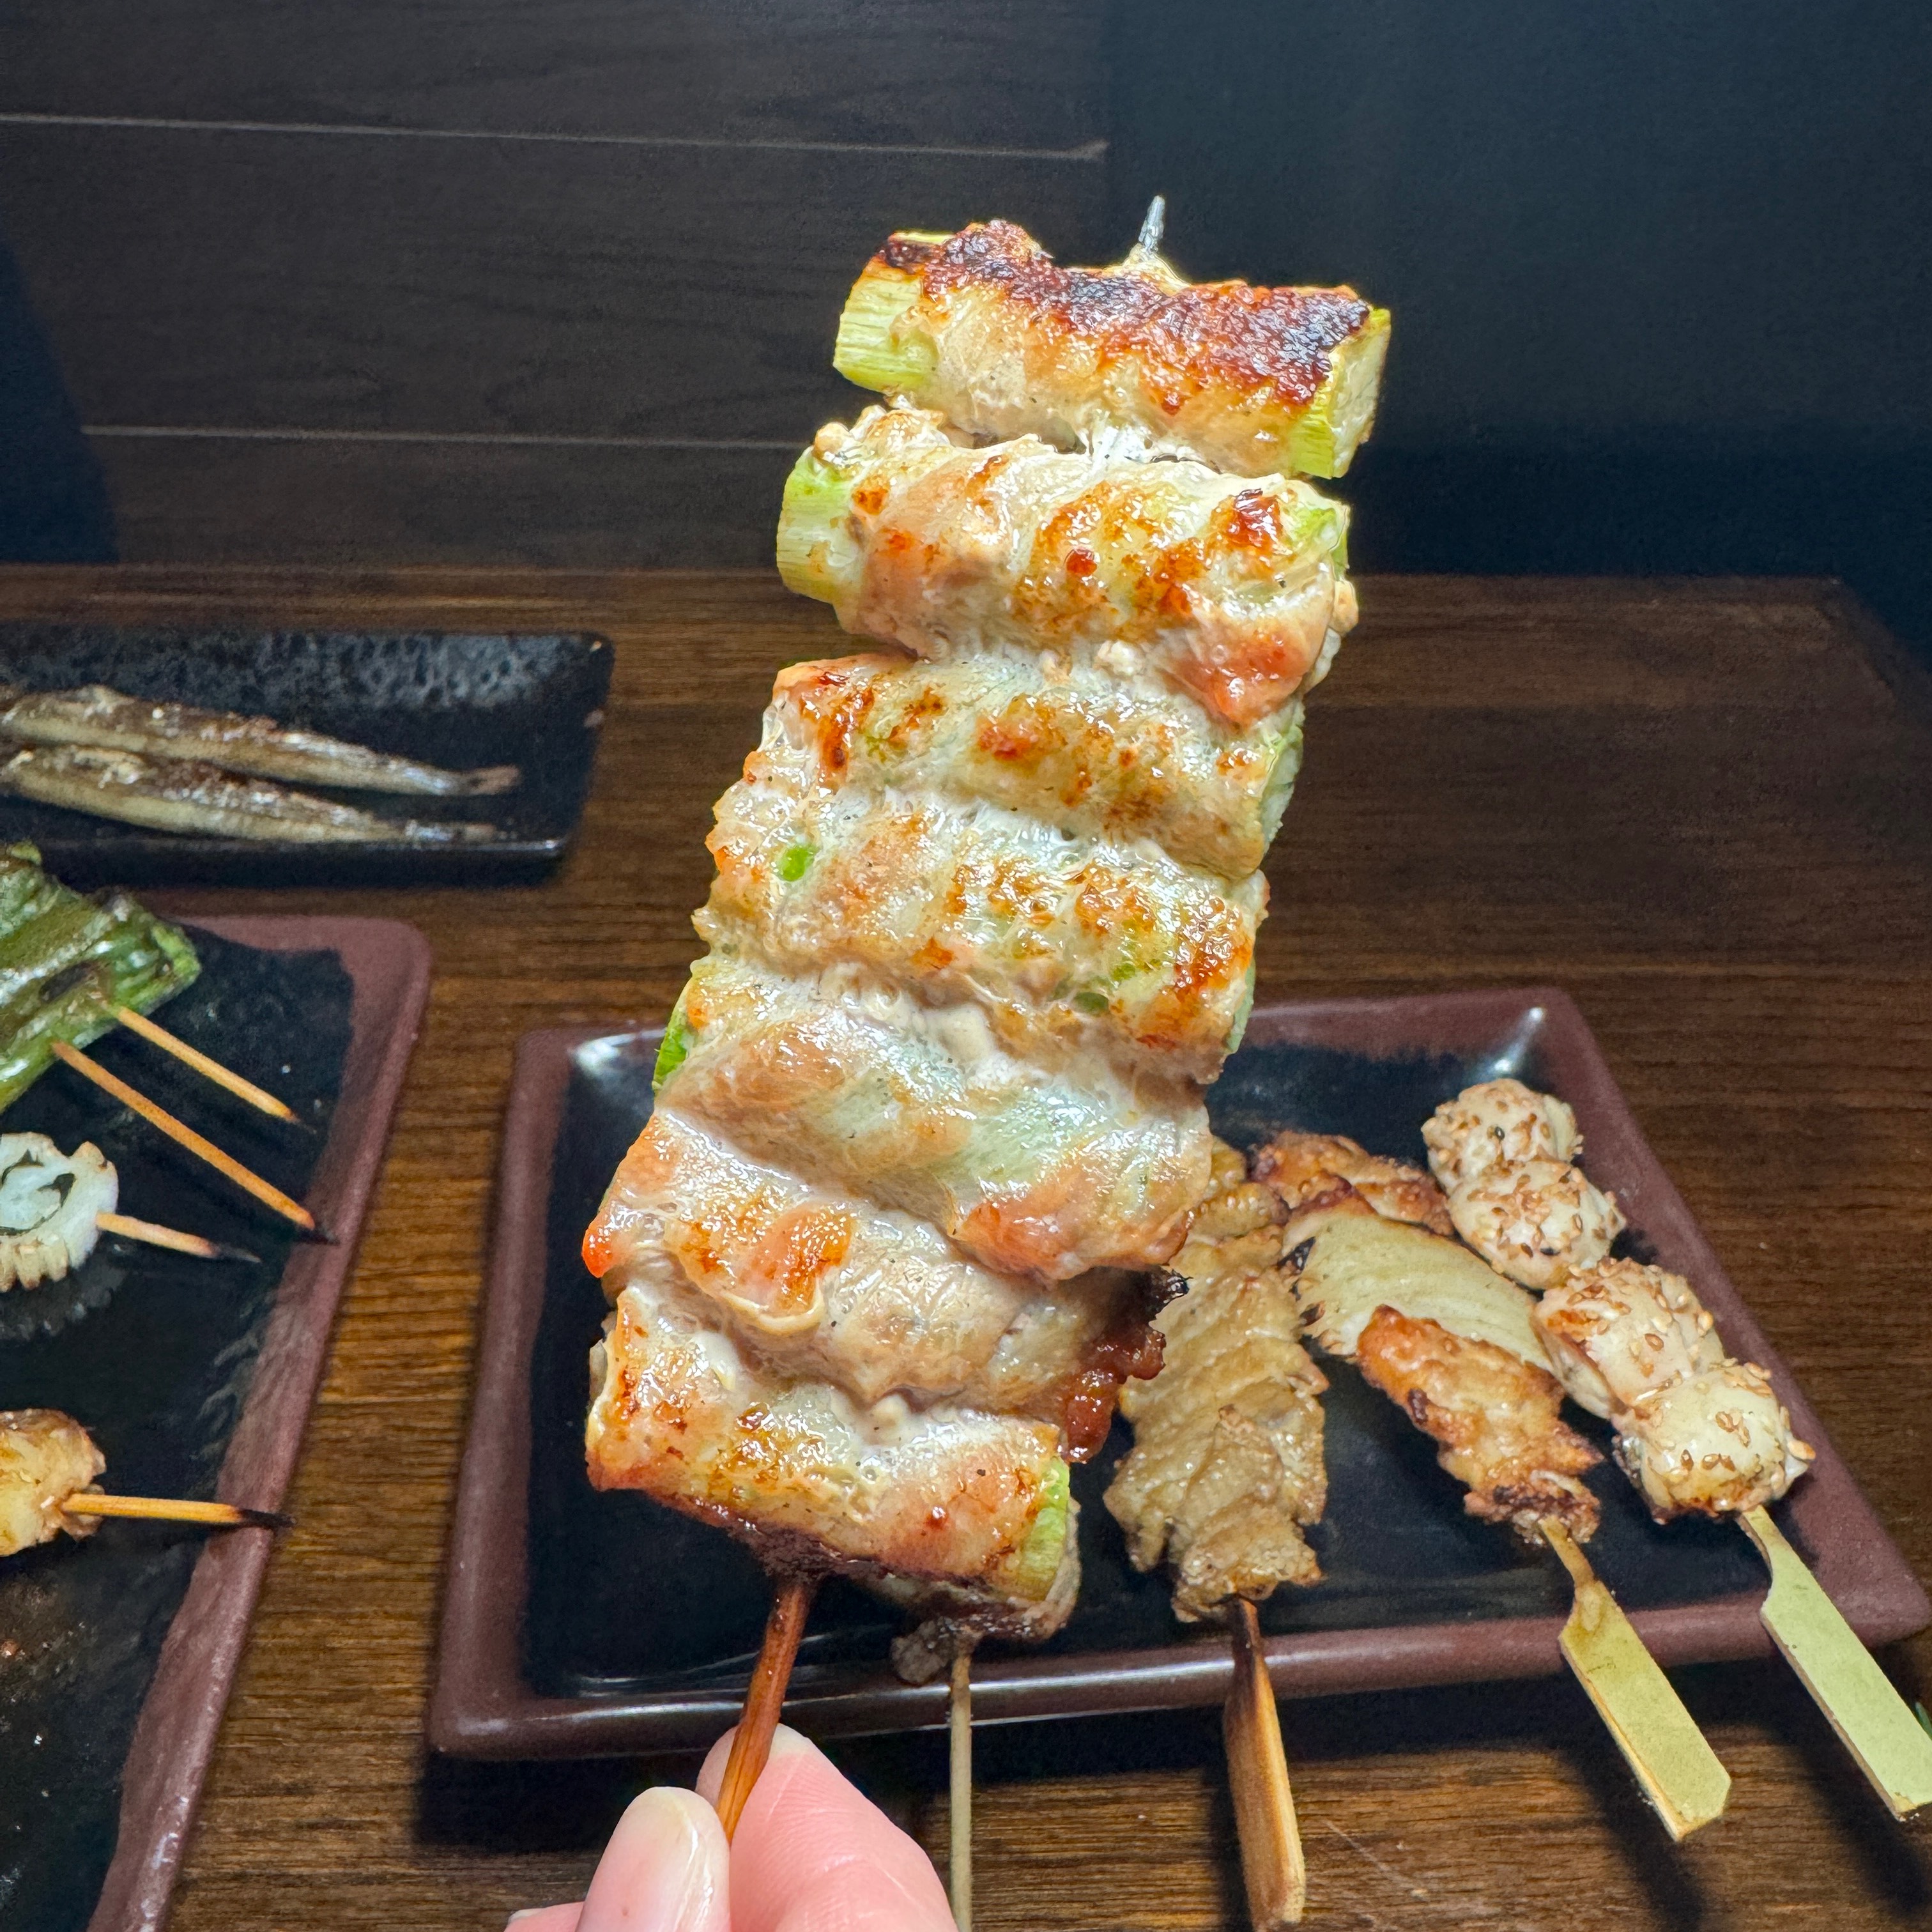 Asparagus With Pork $4.50 at Yakitori Koshiji on #foodmento http://foodmento.com/place/14611